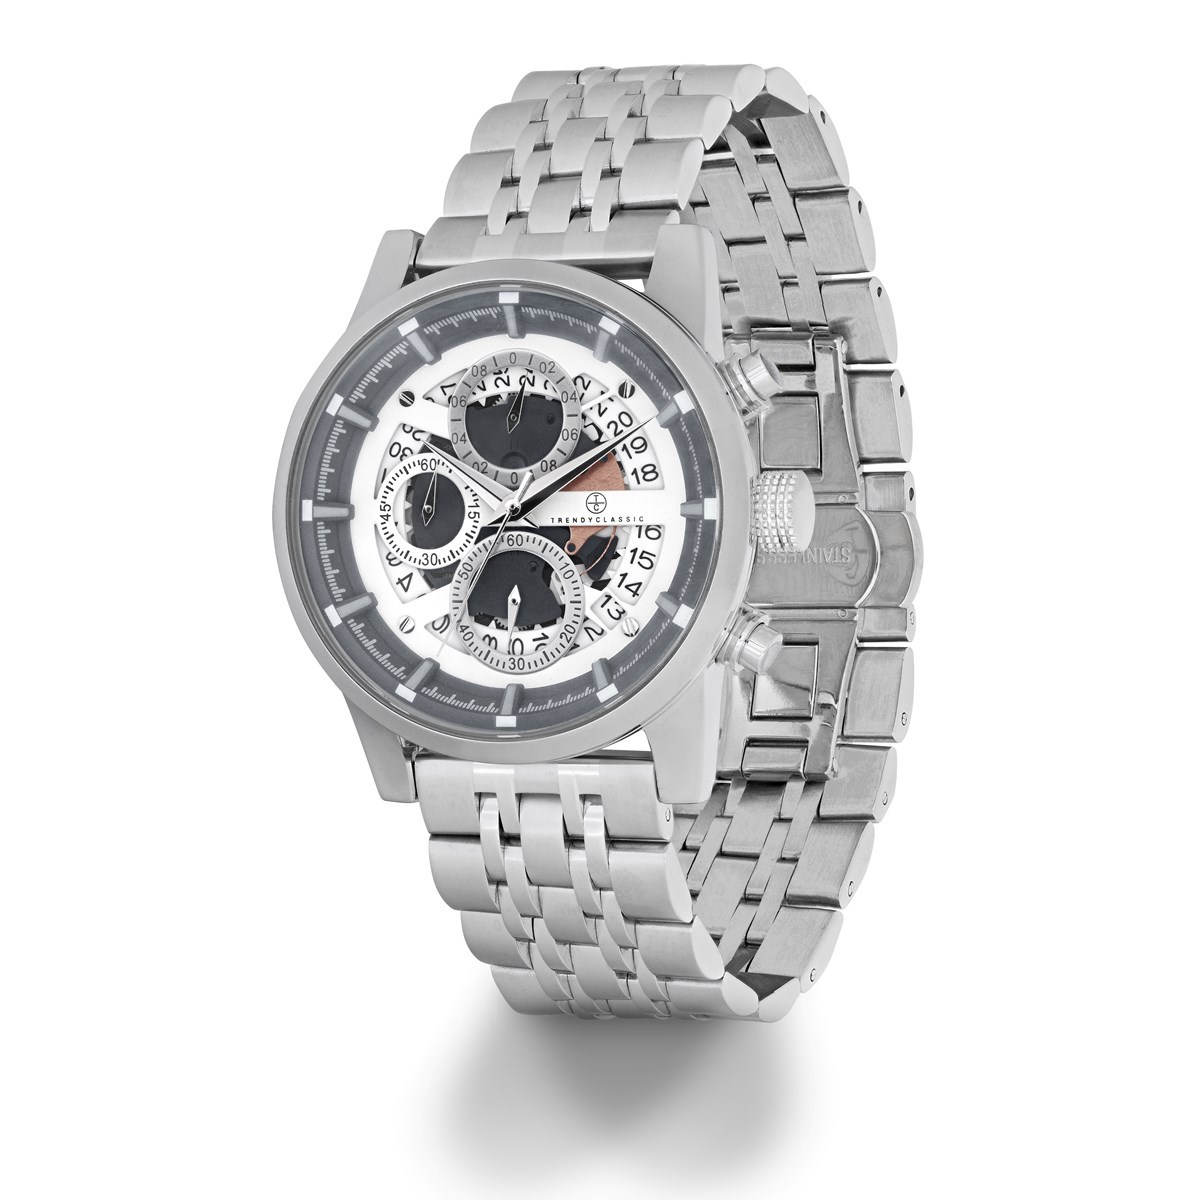 Montre chronographe bracelet acier inoxydable MASTER - vue 2